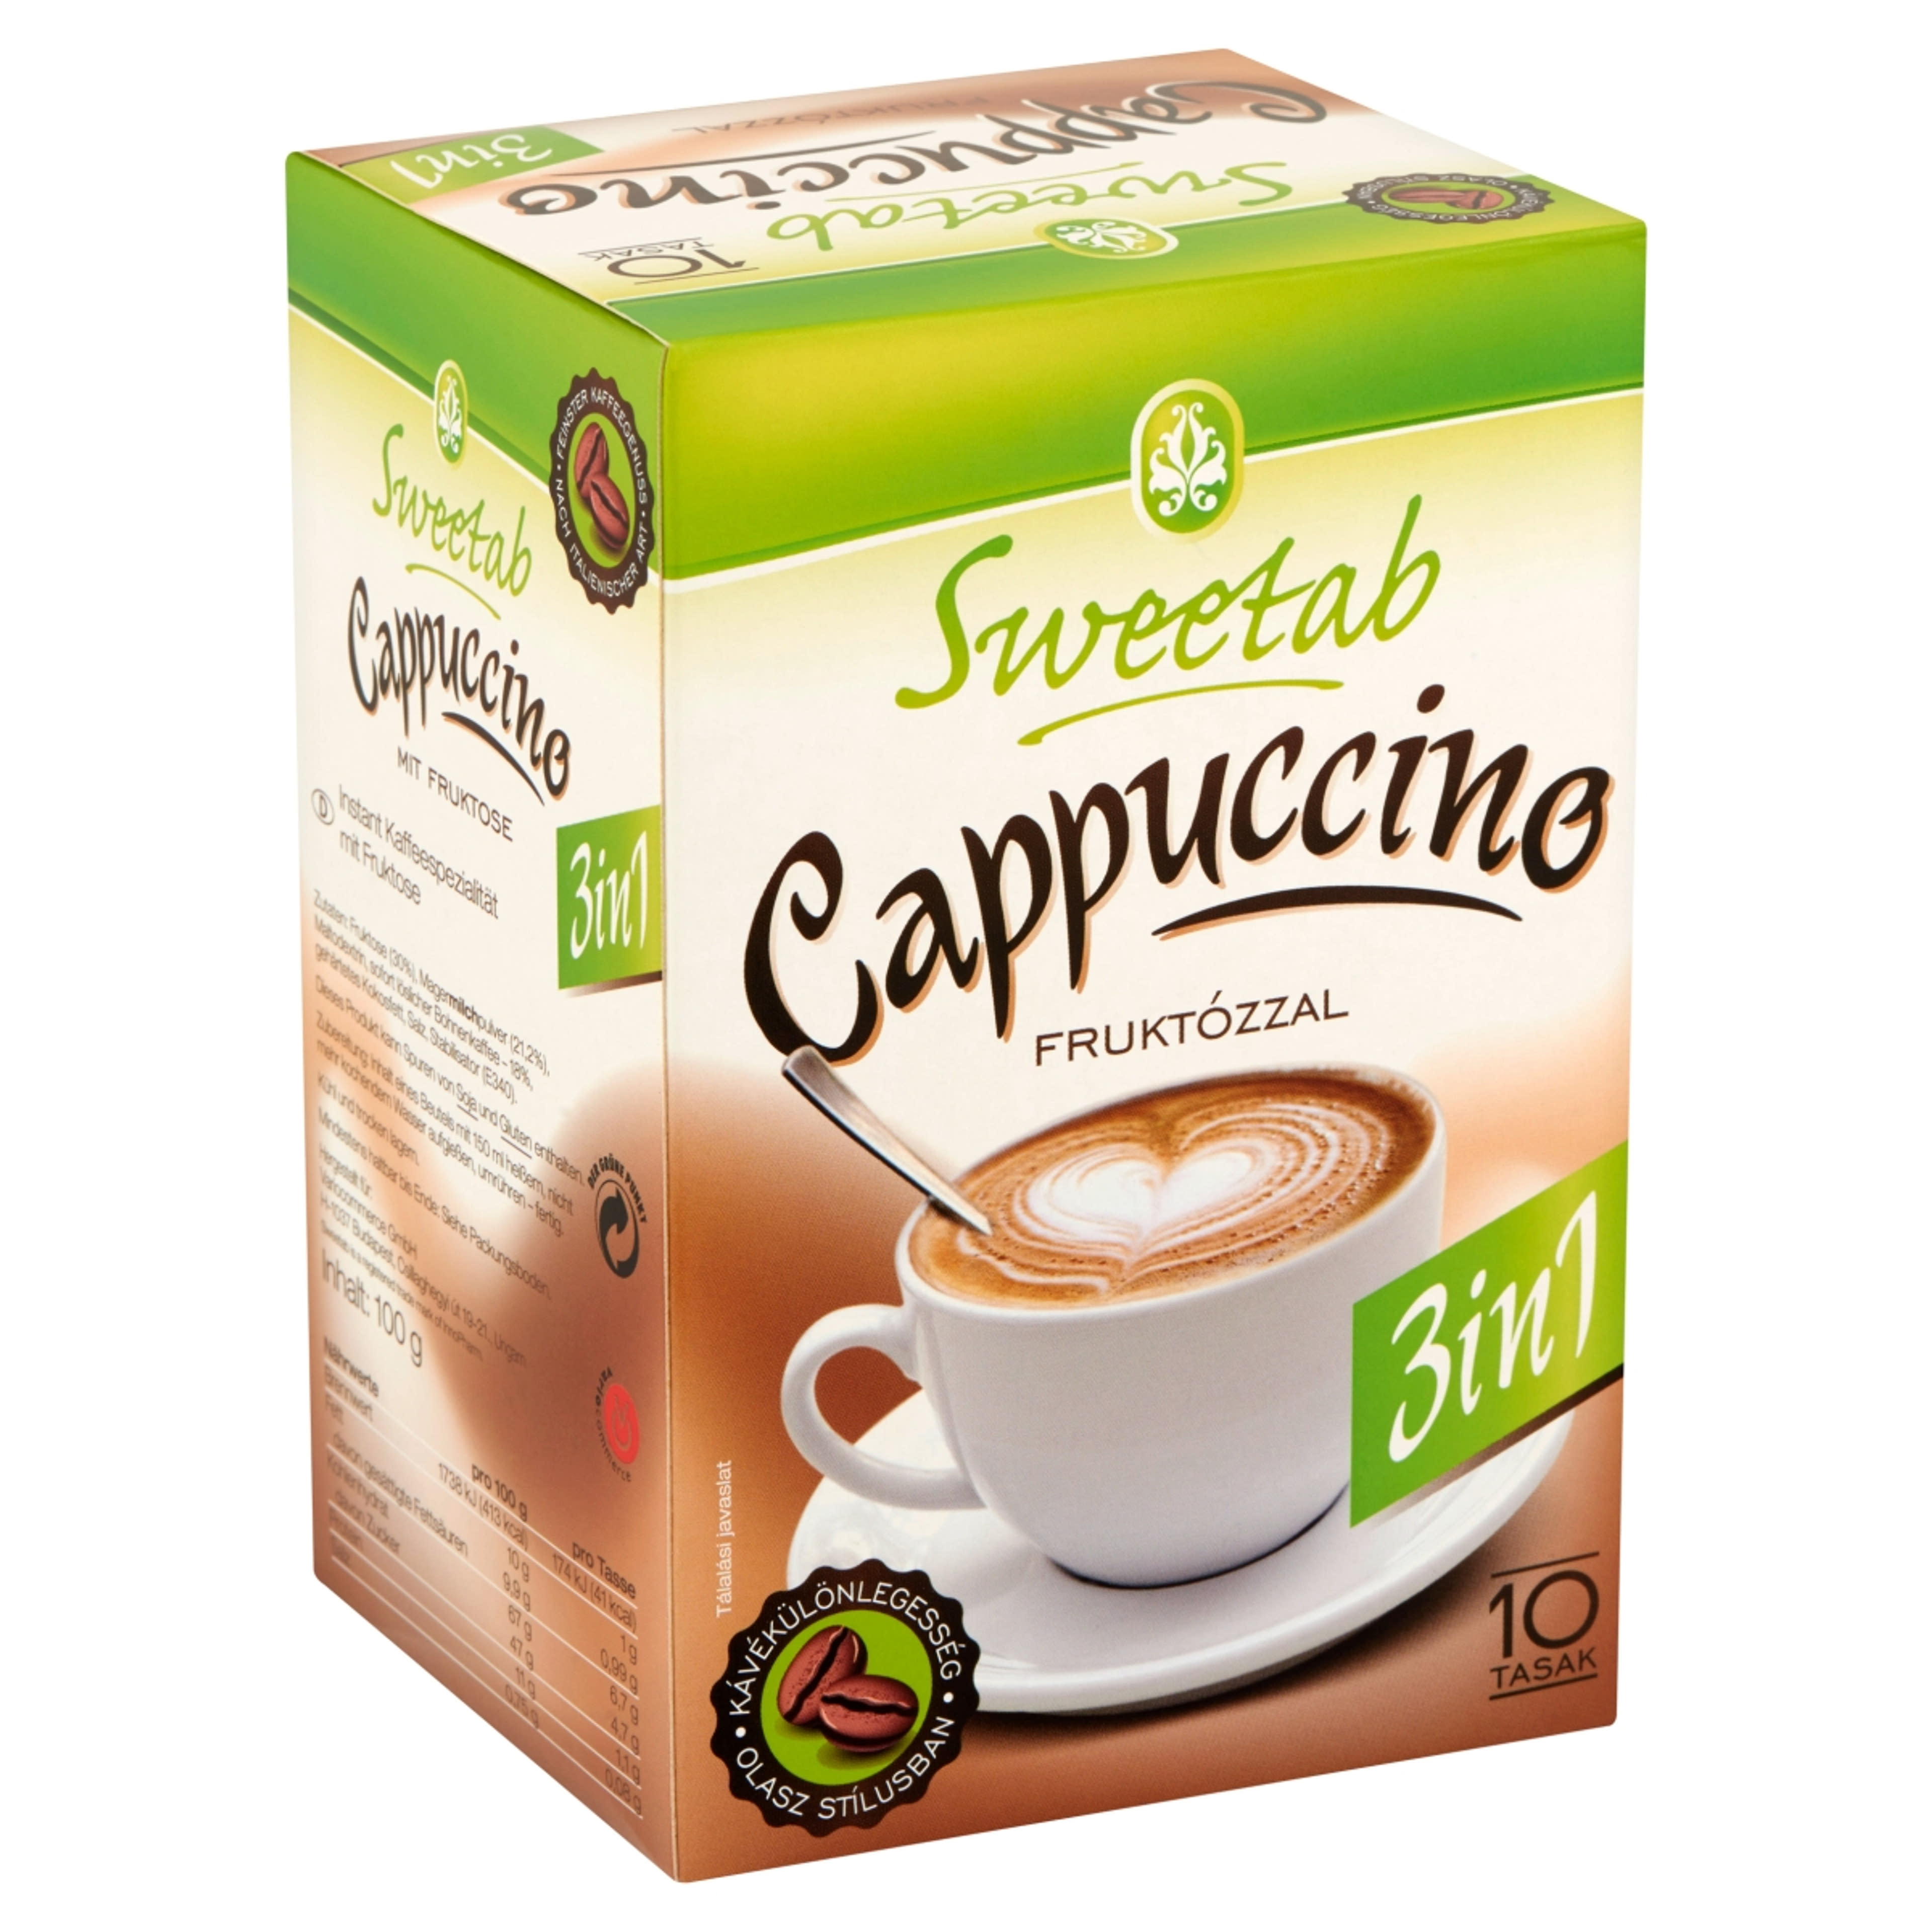 Sweetab cukormentes cappuccino 10x10 - 100 g-3